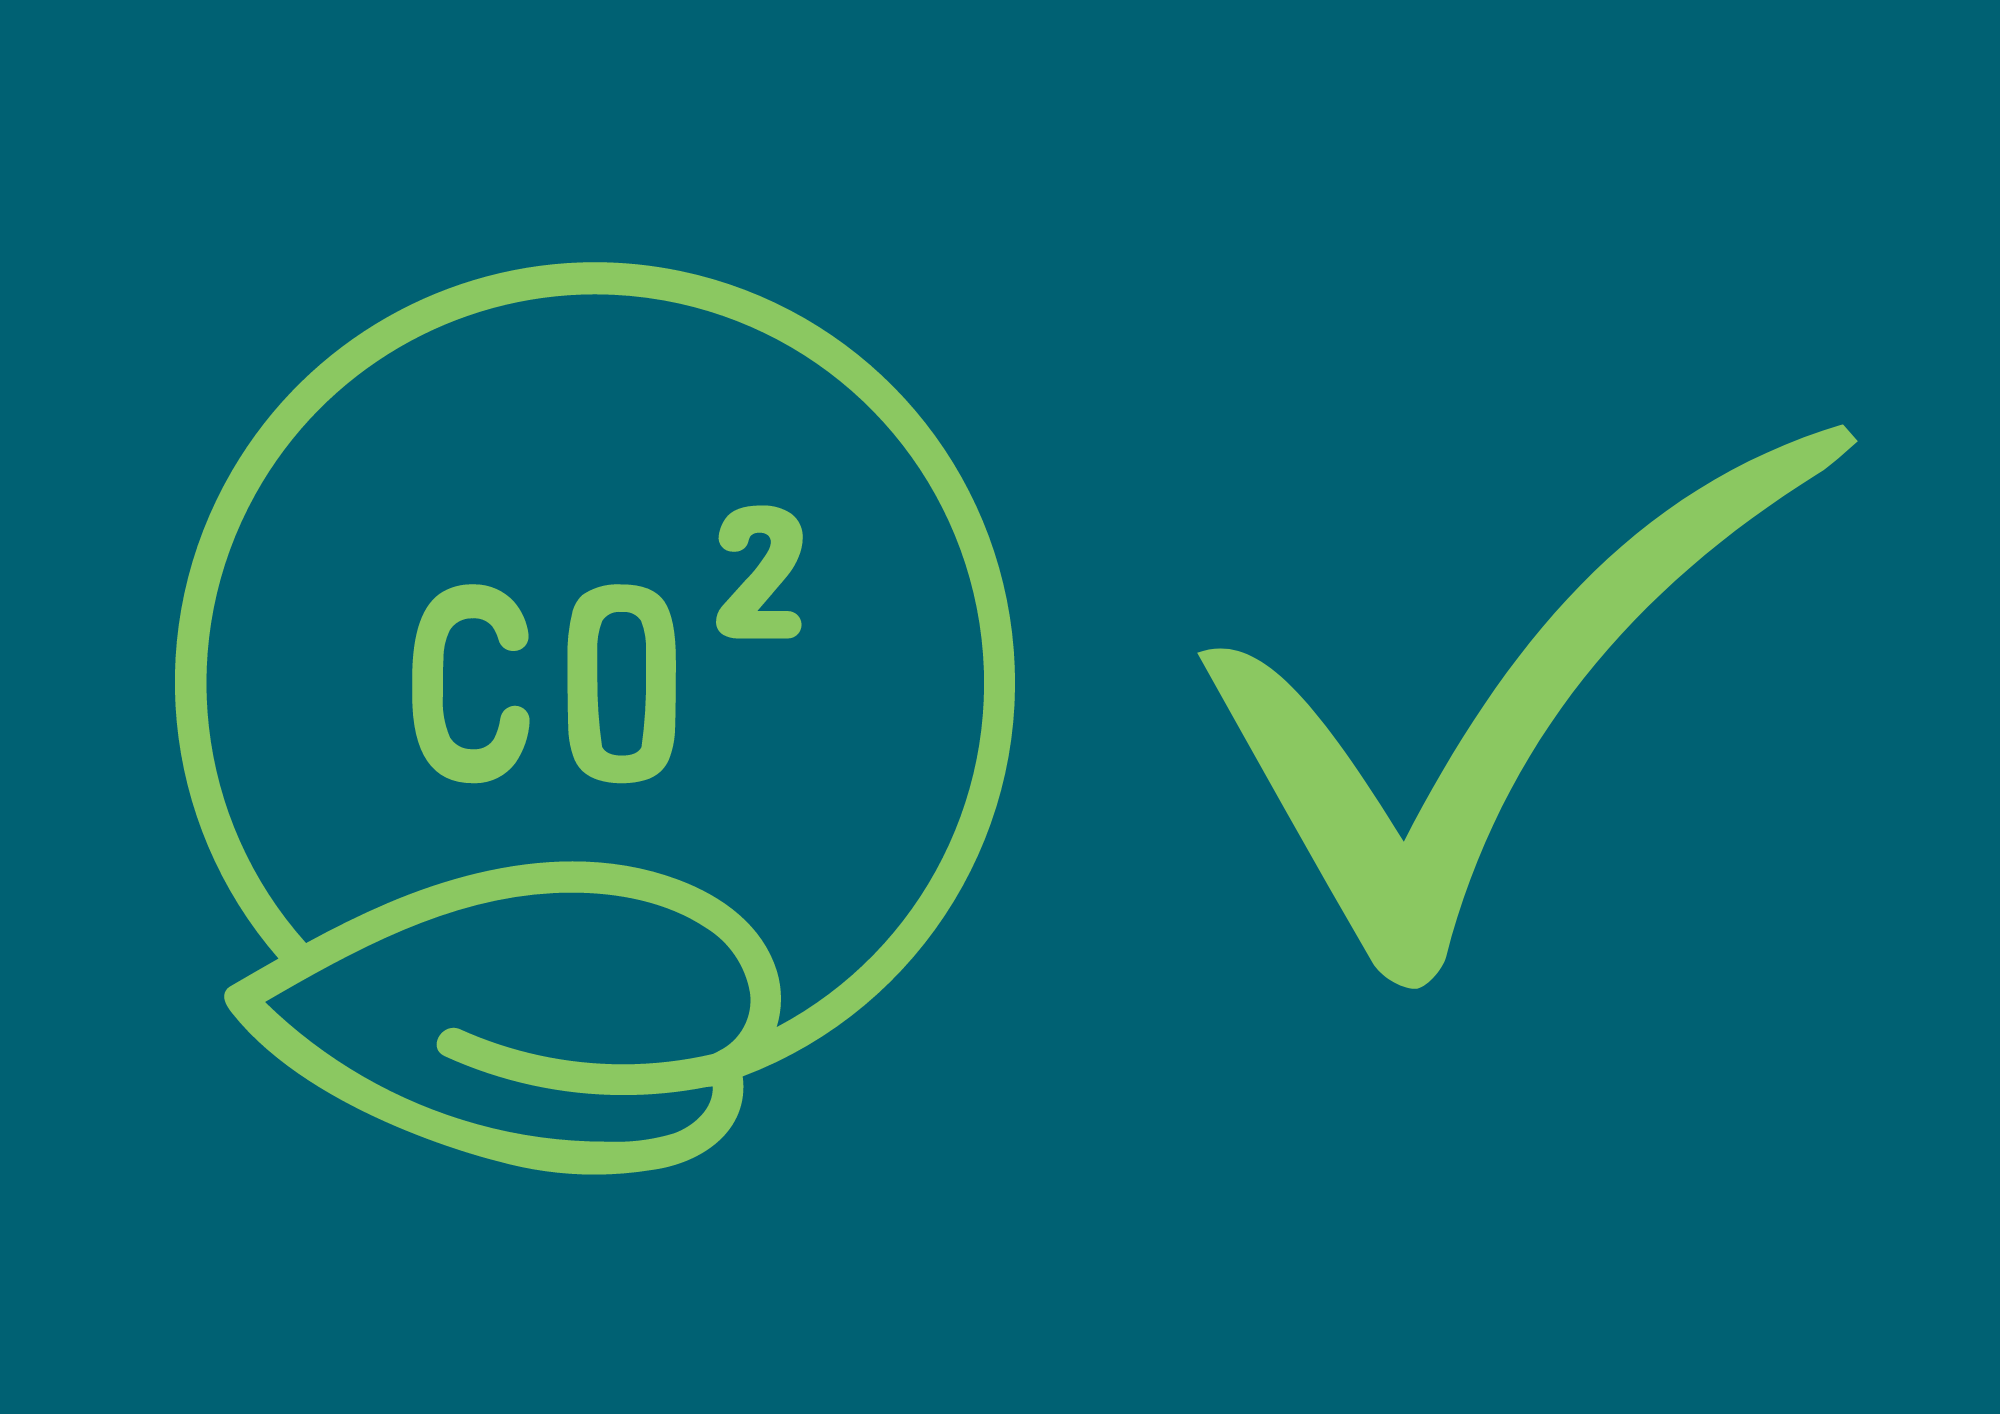 Ethical carbon plans